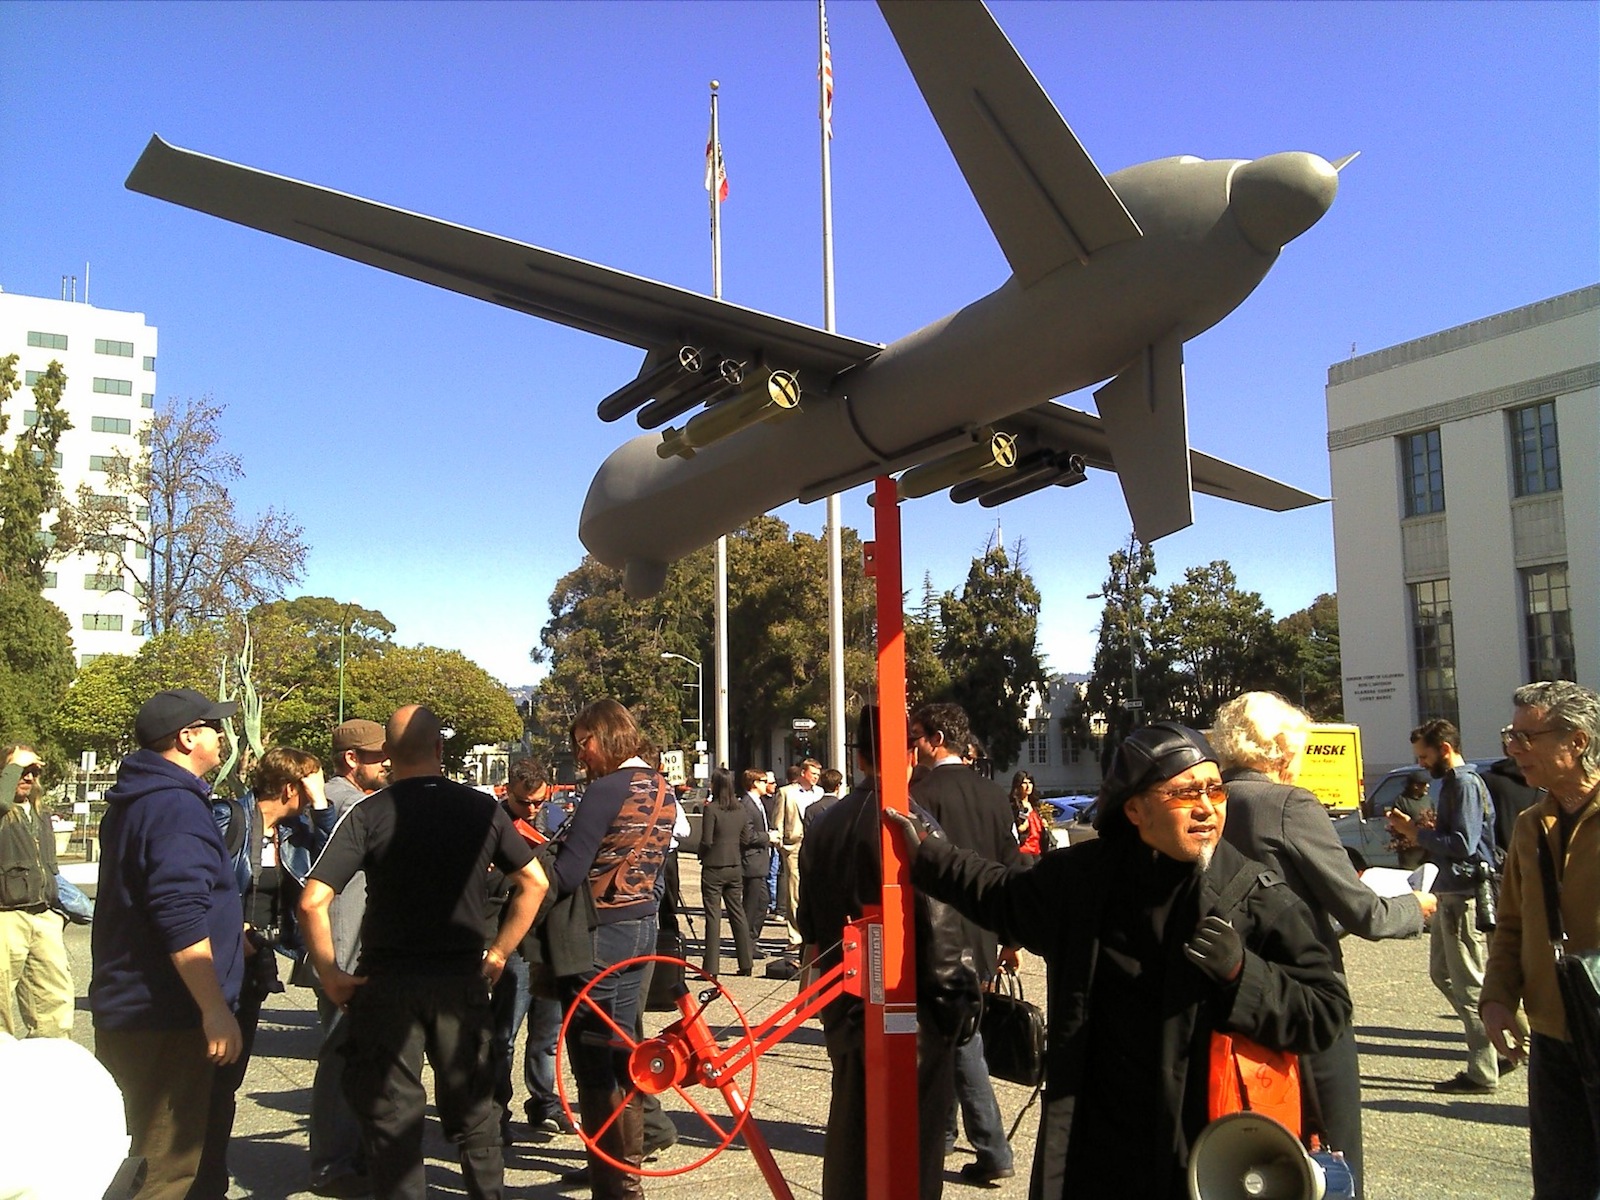 cafetaria Sluit een verzekering af barricade Alameda County Sheriff's drone program proves divisive - Oakland North